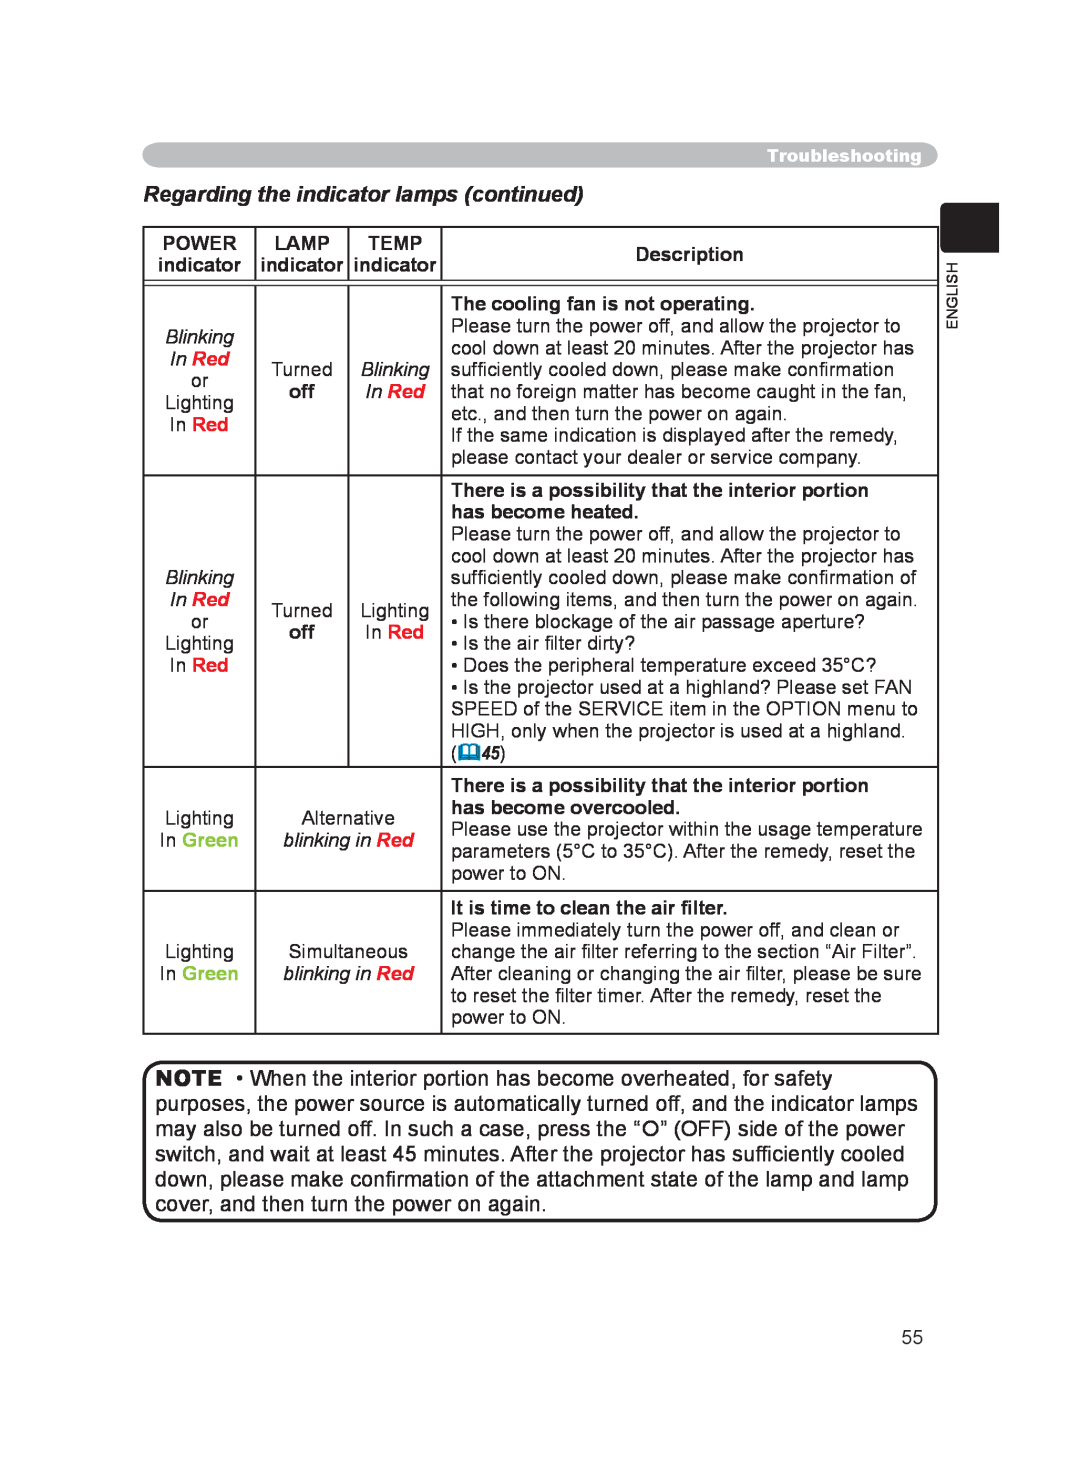 Hitachi EDPJ32 user manual Regarding the indicator lamps continued, In Green 